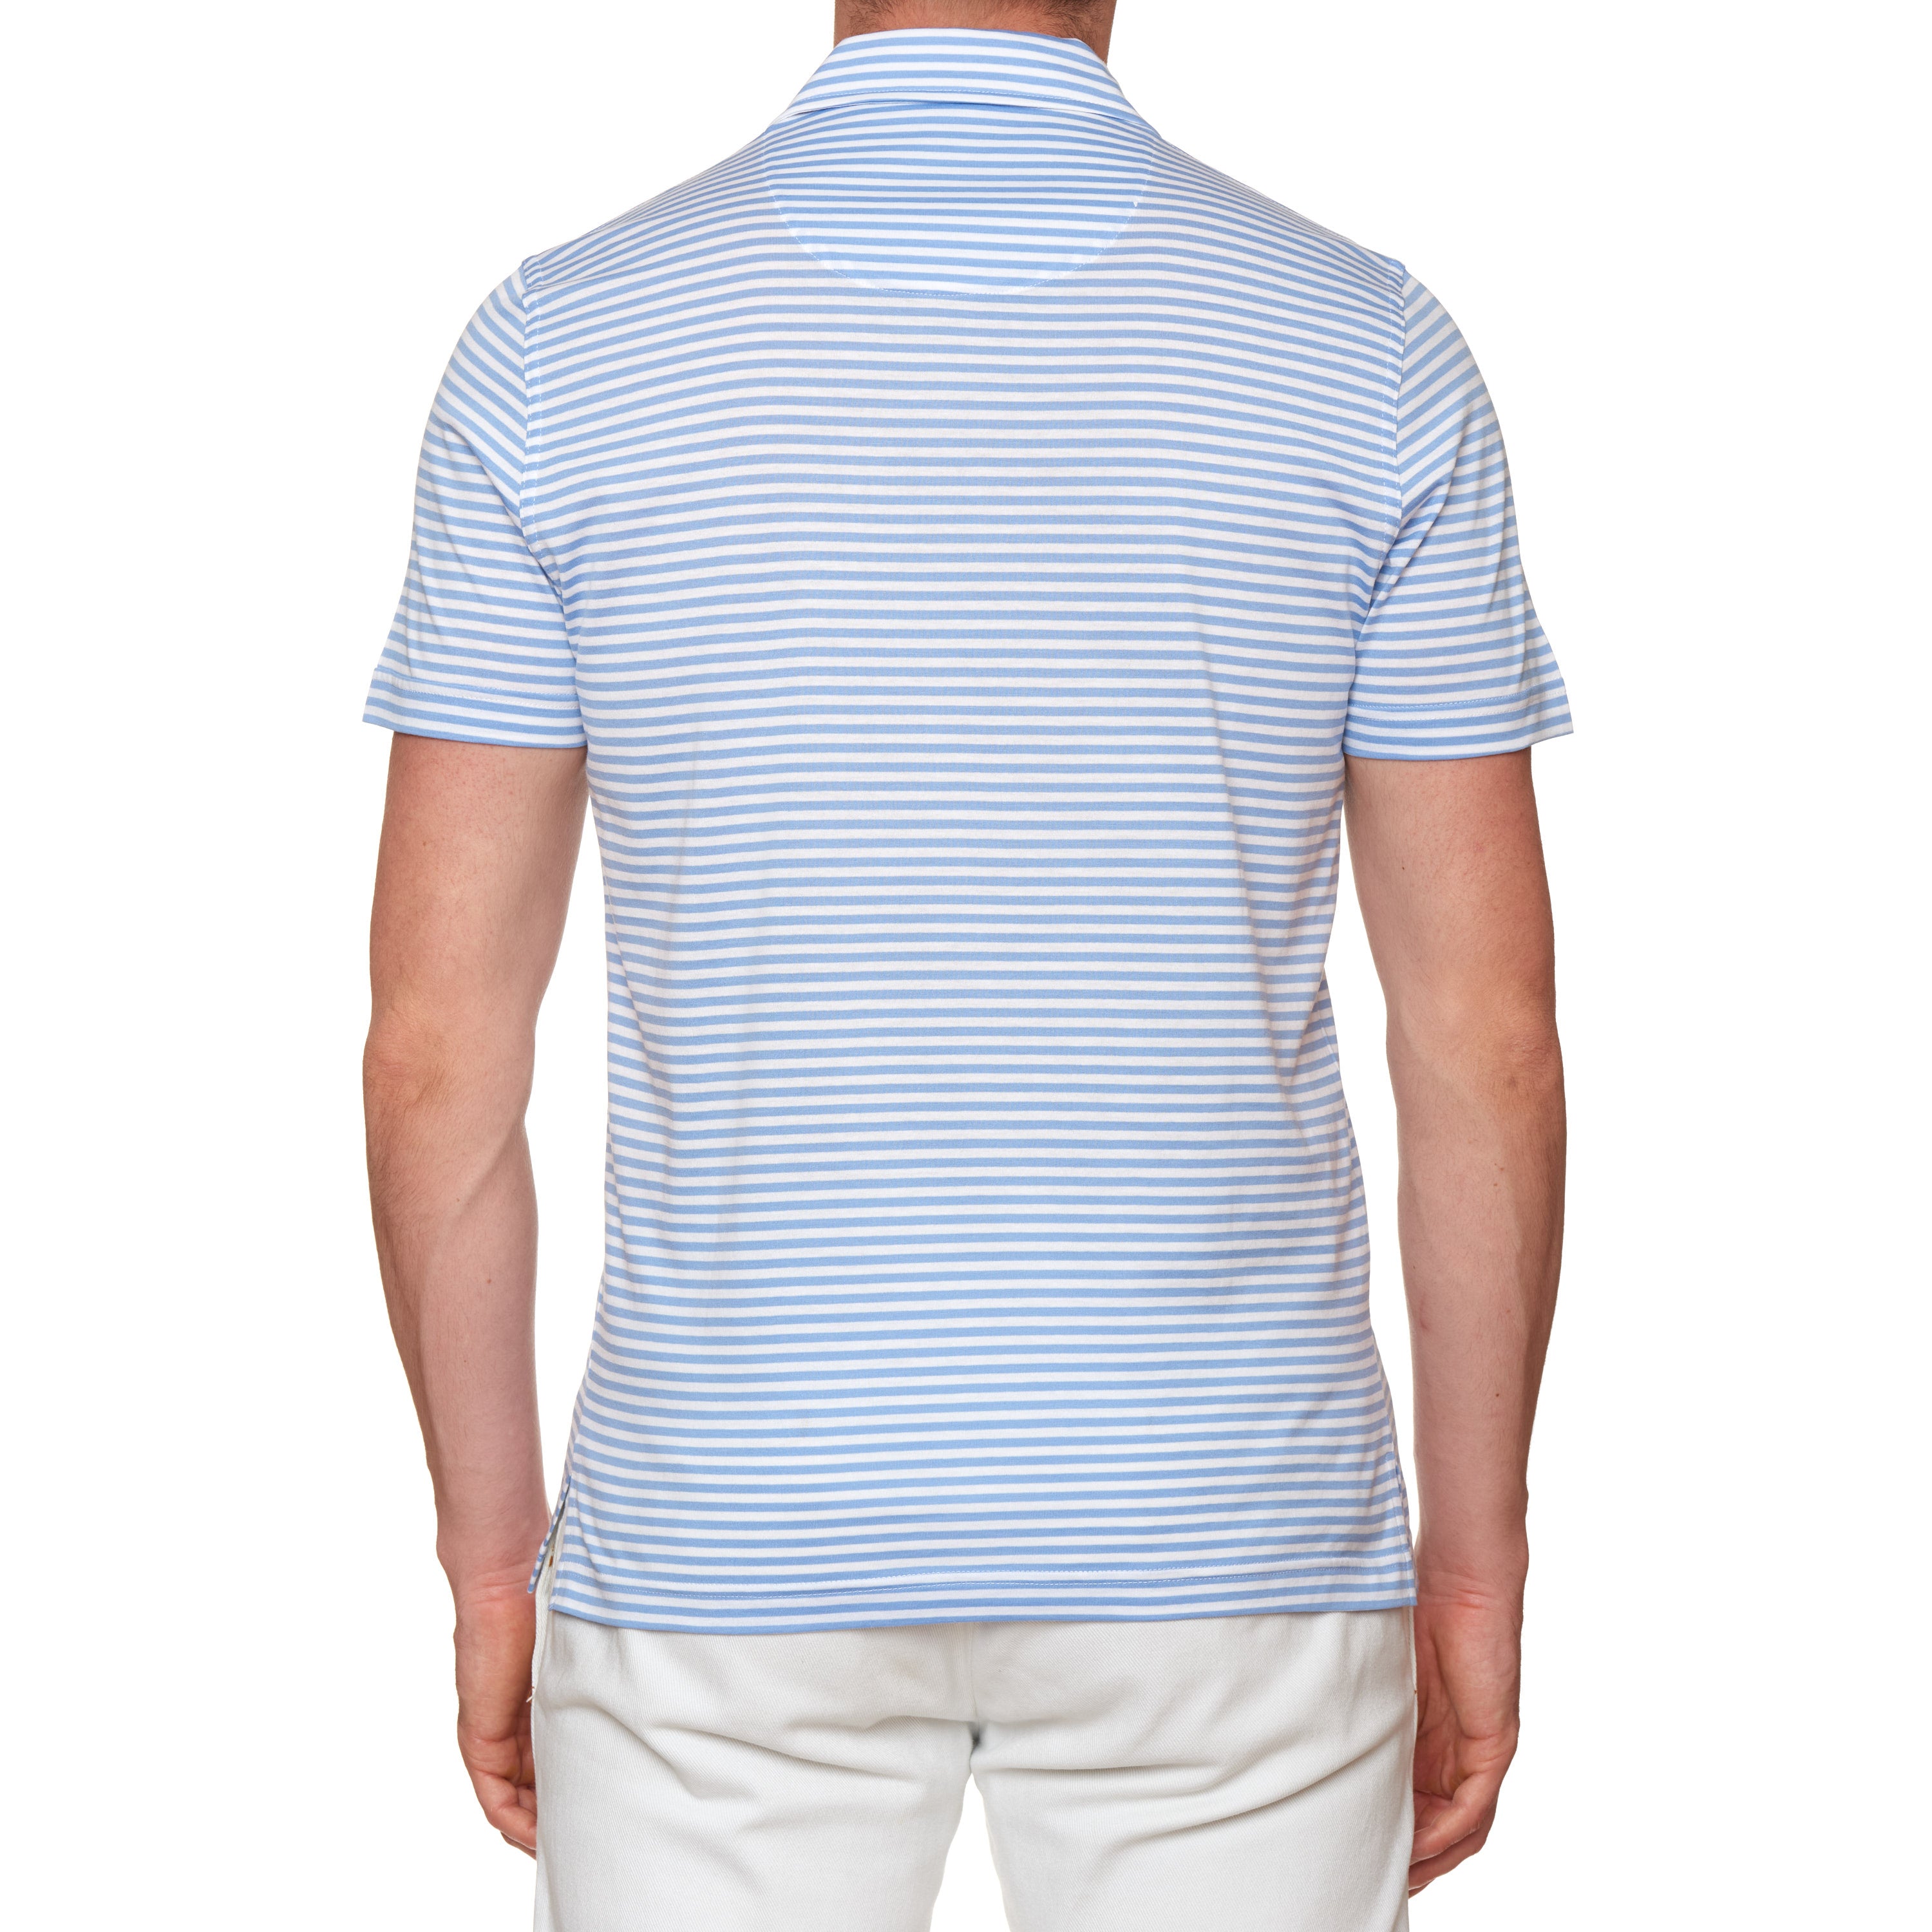 FEDELI "Florida" Blue-White Striped Cotton Jersey Short Sleeve Polo Shirt 46 NEW US XS FEDELI